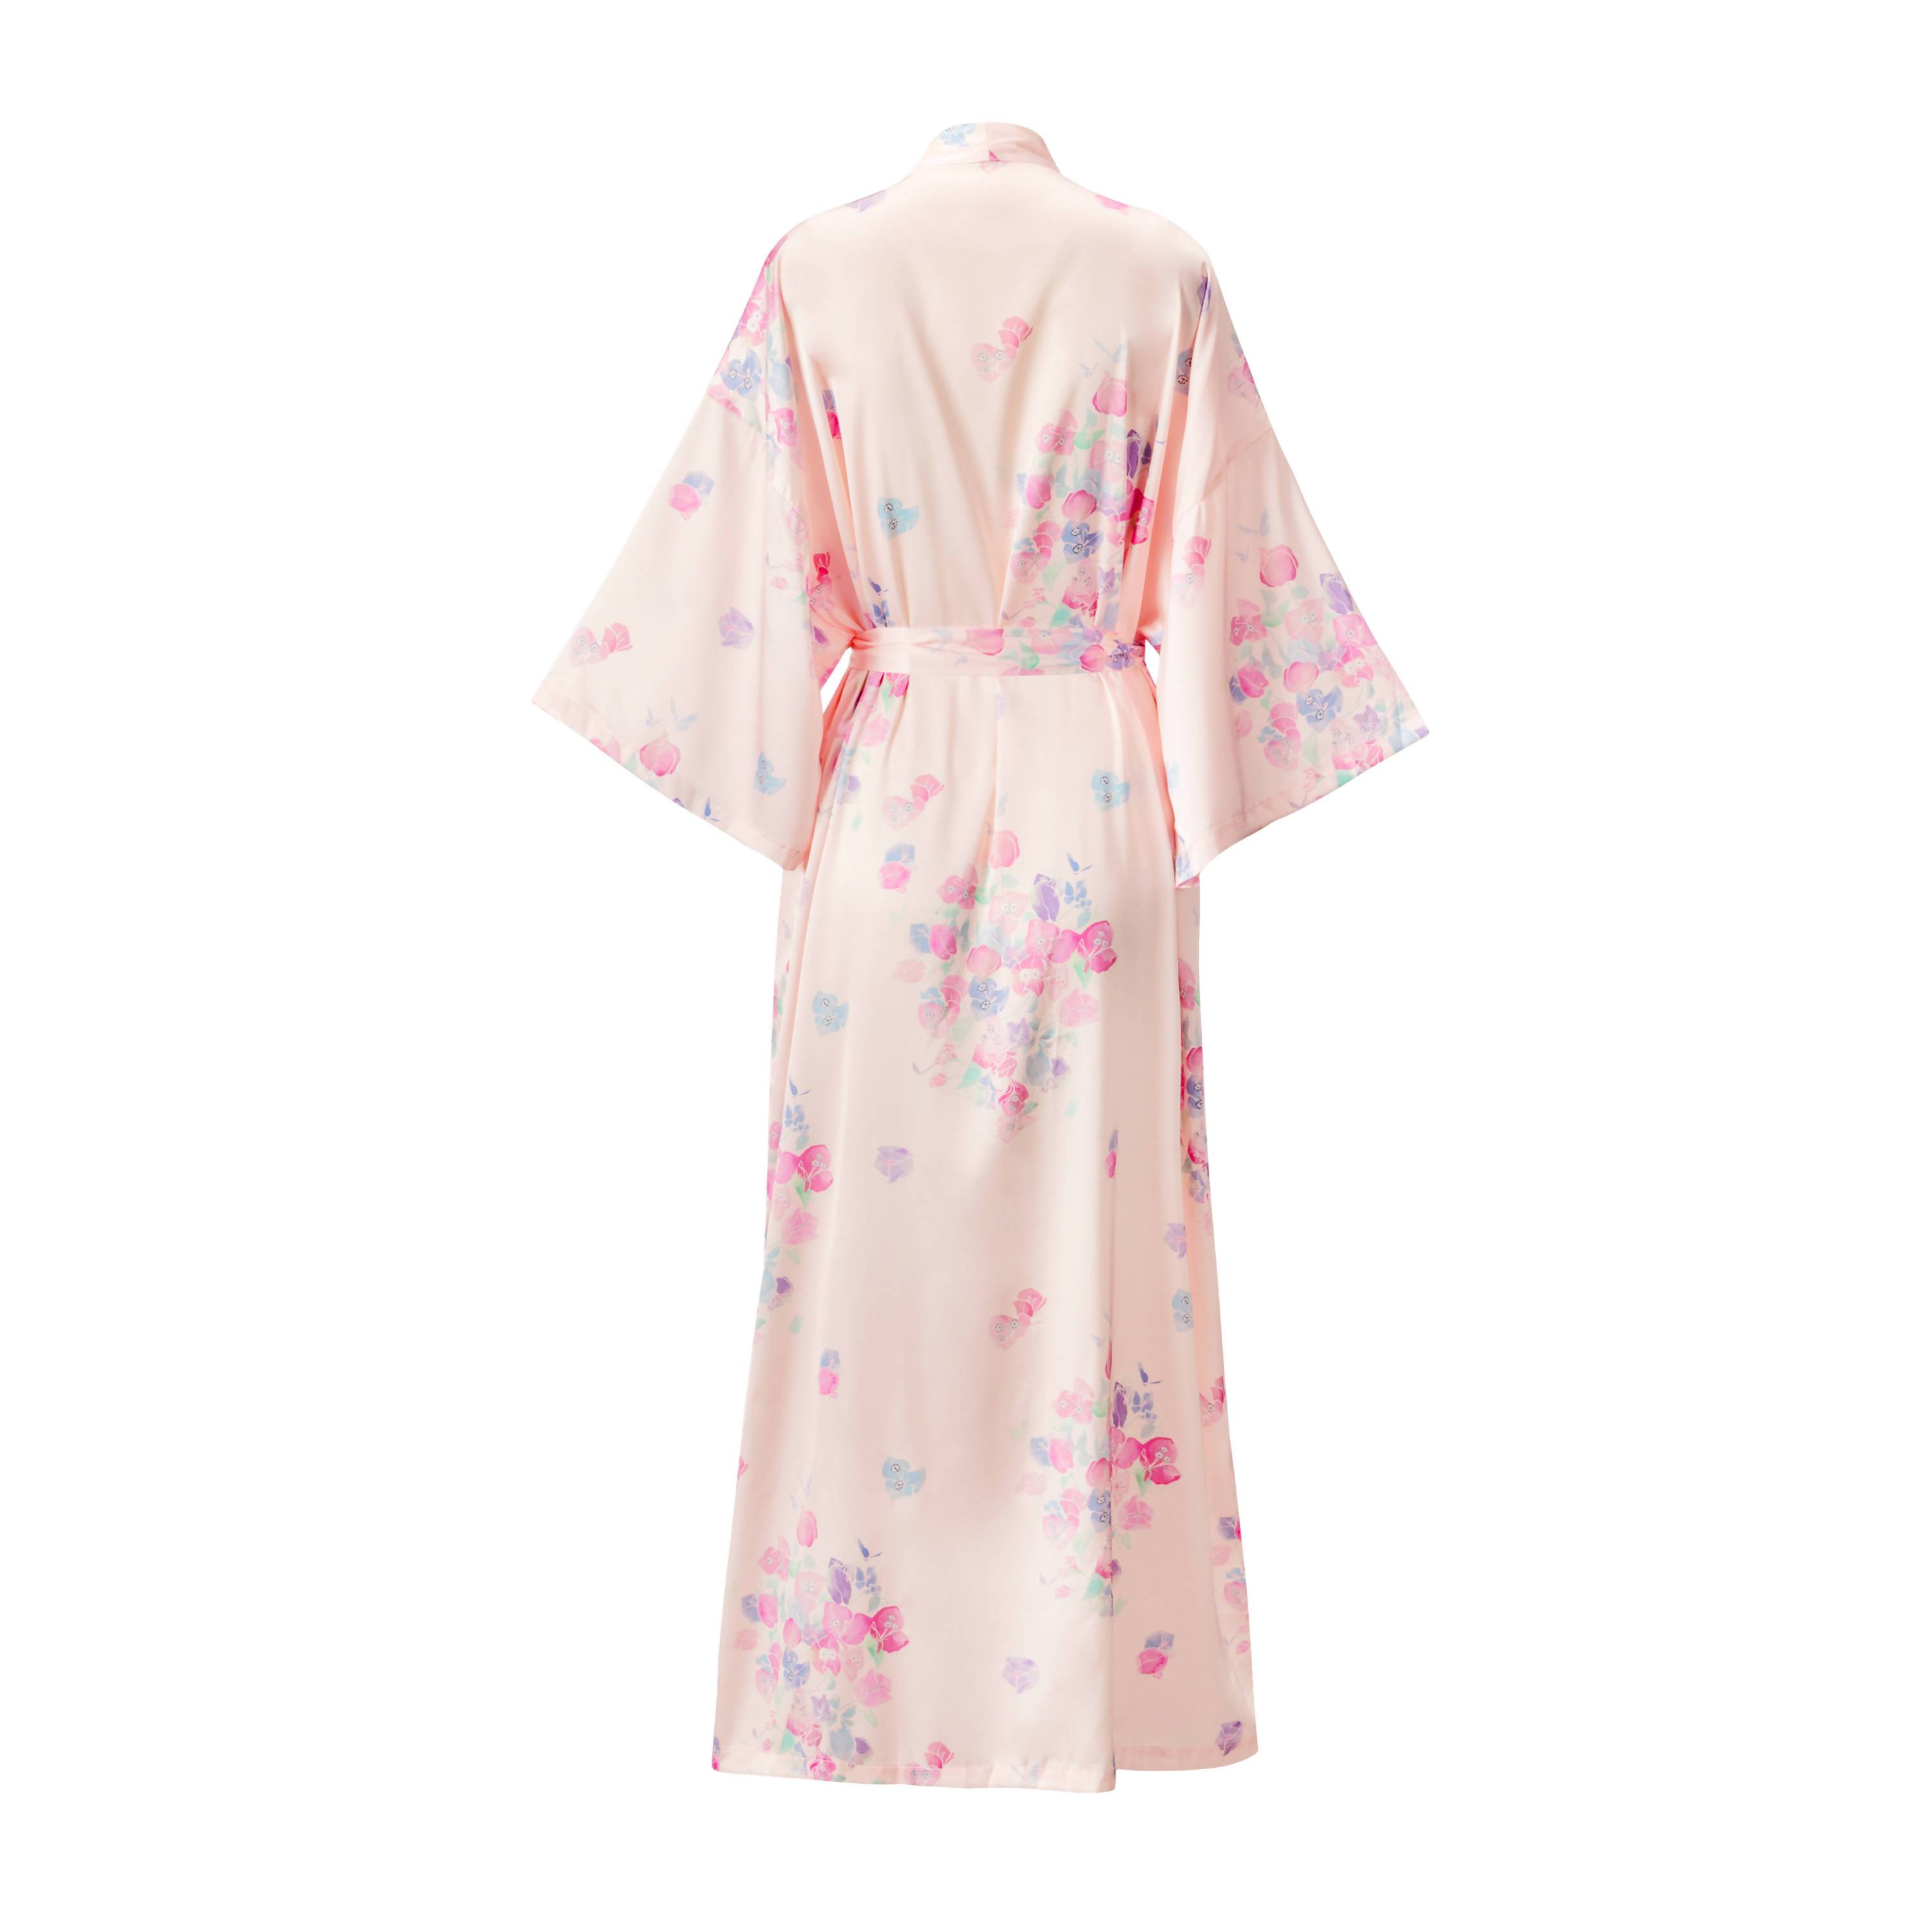 Blushing Bougainvillea Kimono Robe (Ankle) - Sleepwear for Women - The Mariposa Collection - Naiise